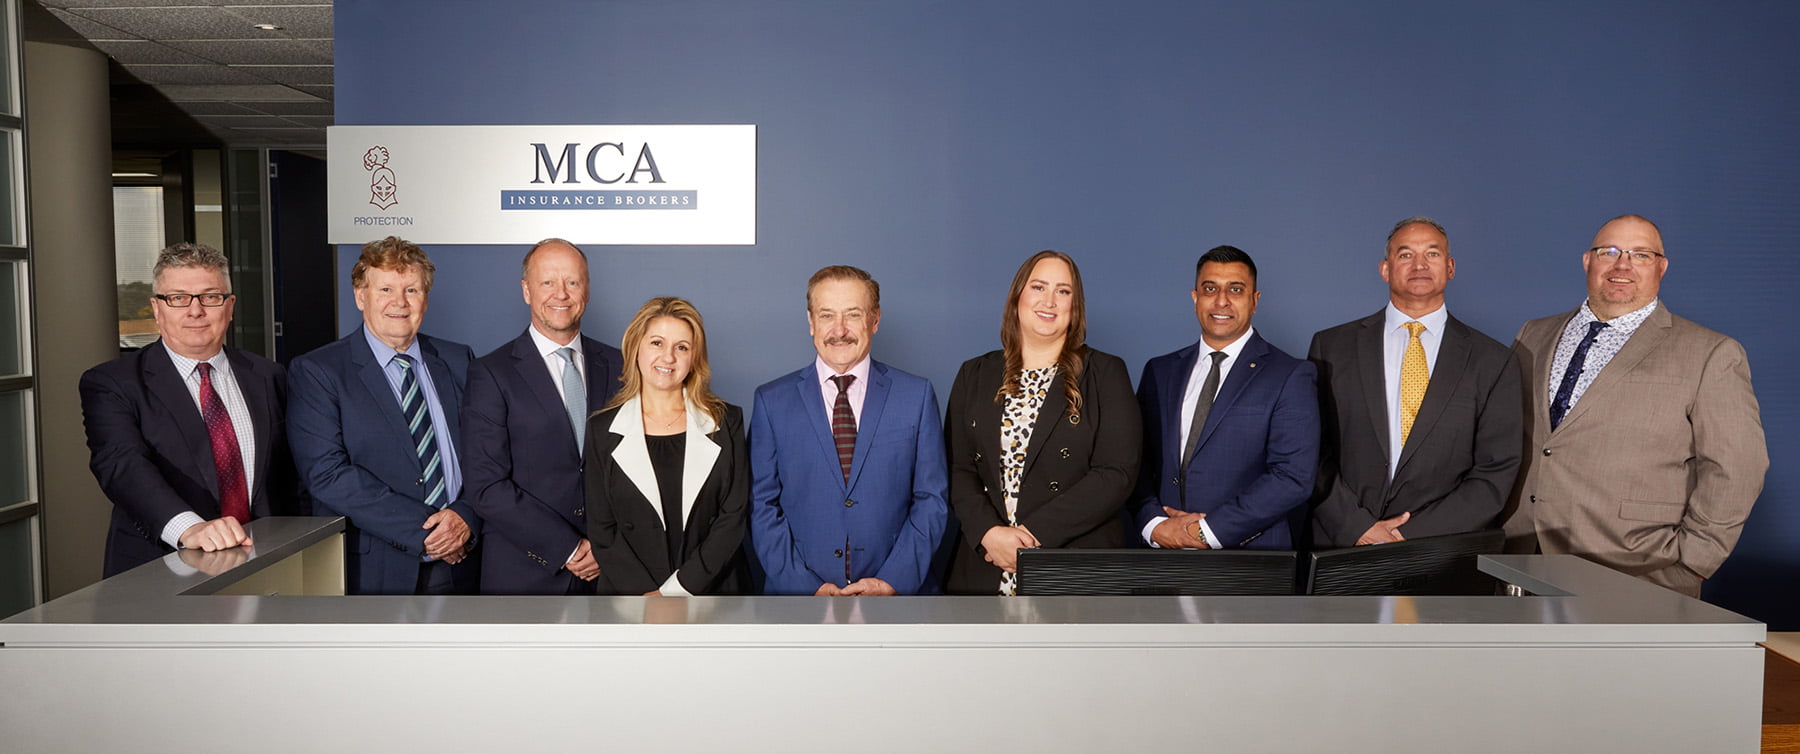 MCA Insurance Brokers Group photo